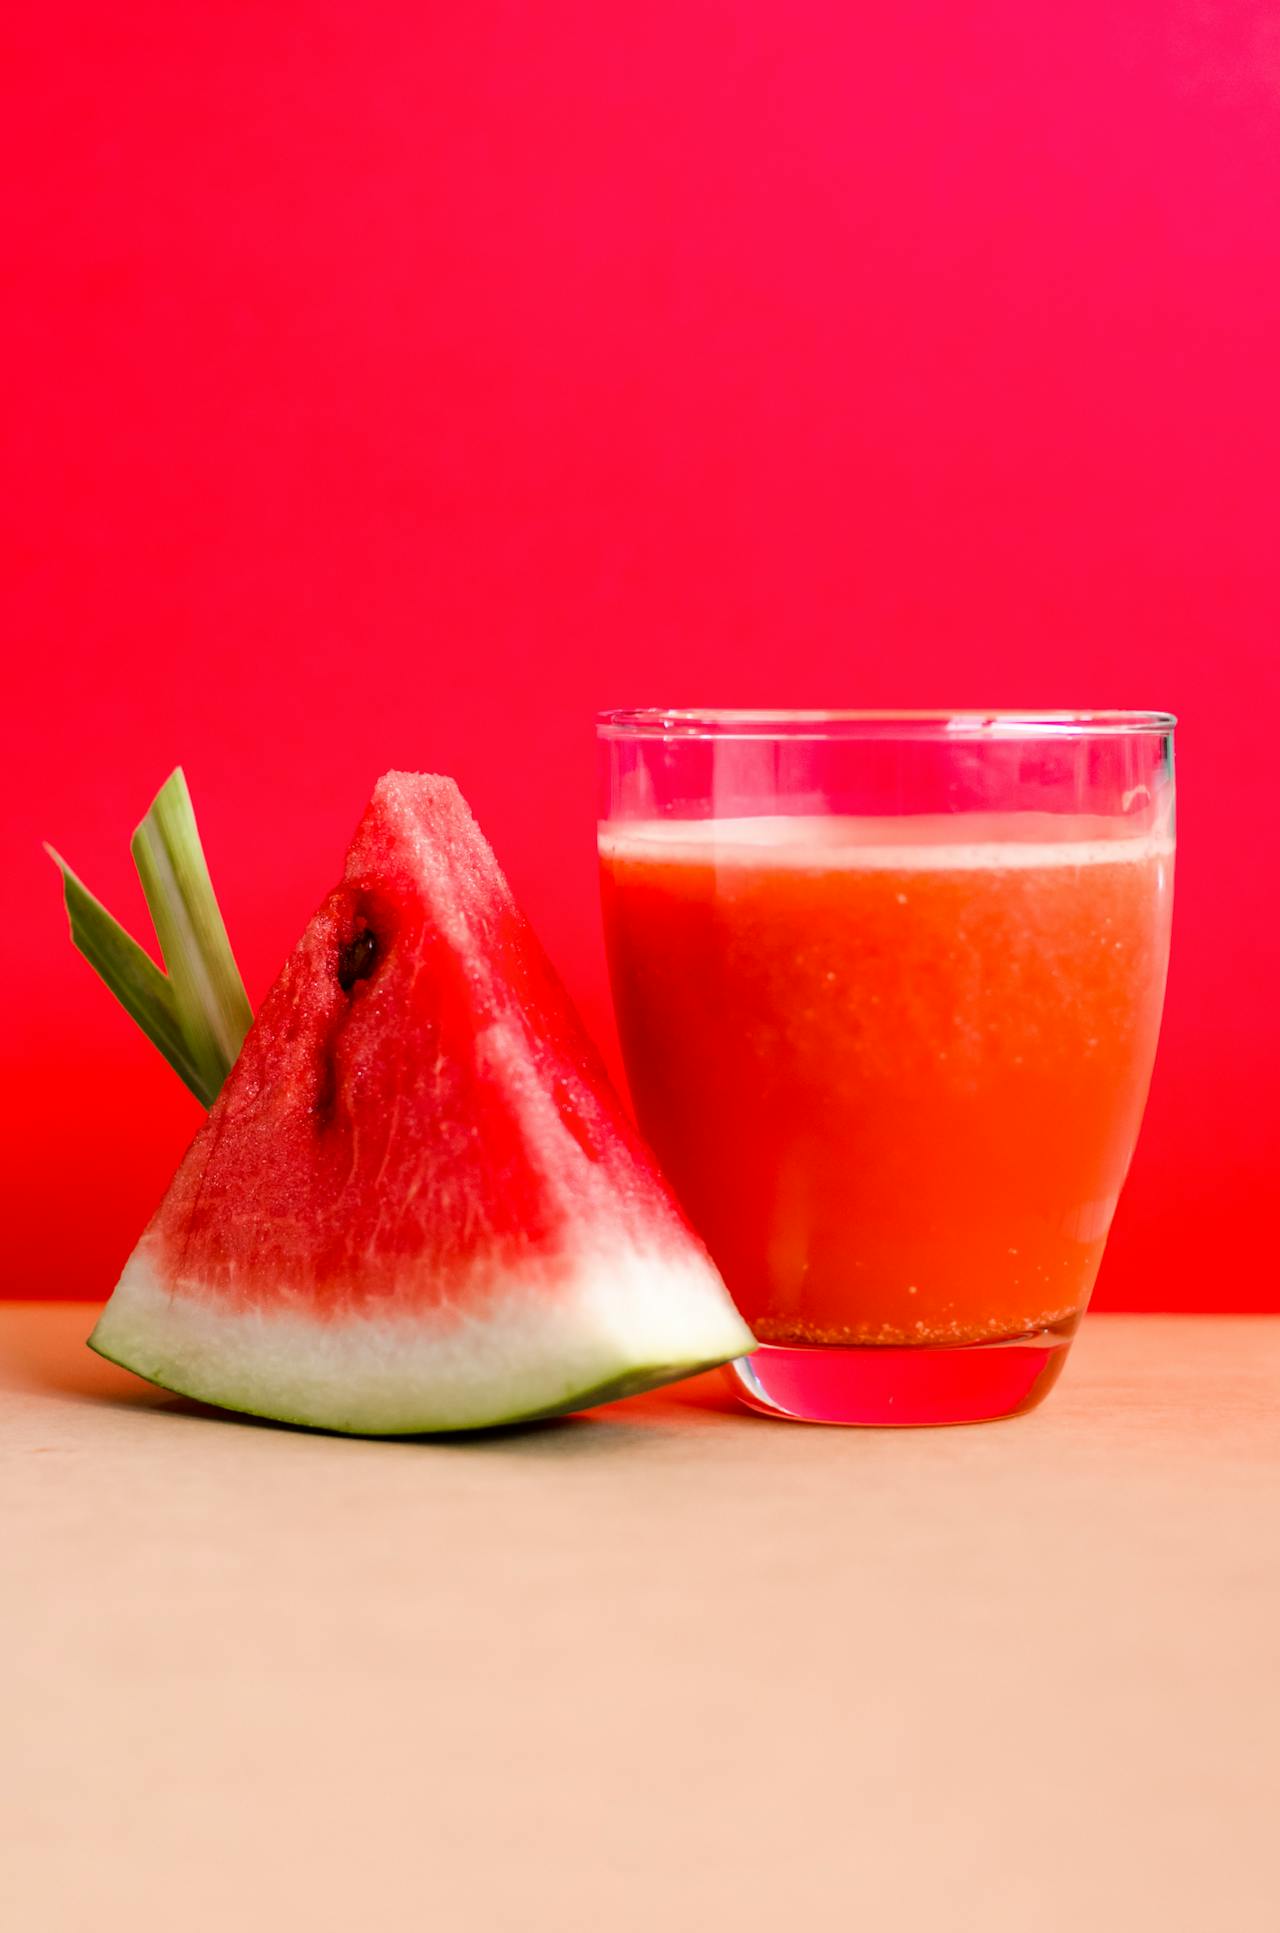 Watermelon and skin health